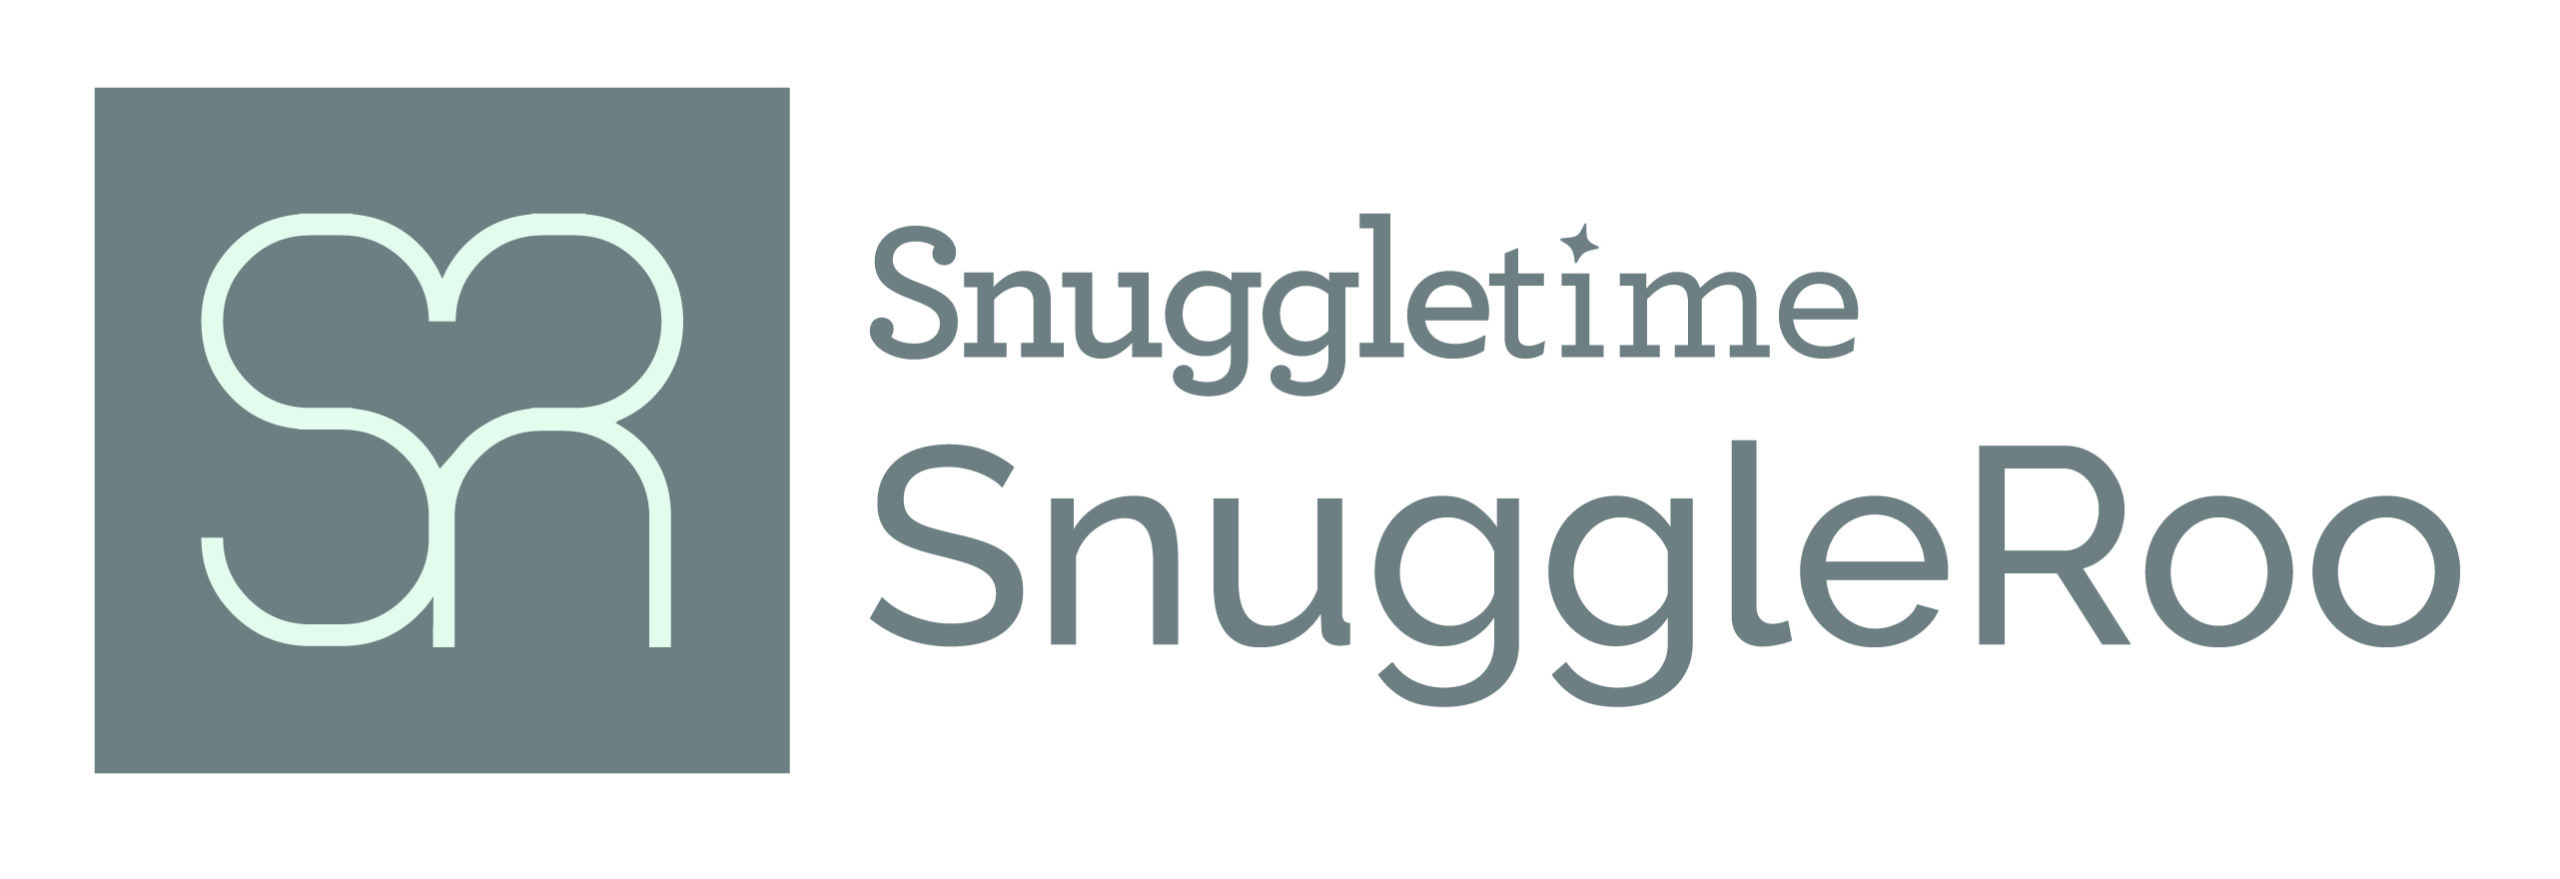 SnuggleRoo-horizontal logo-01